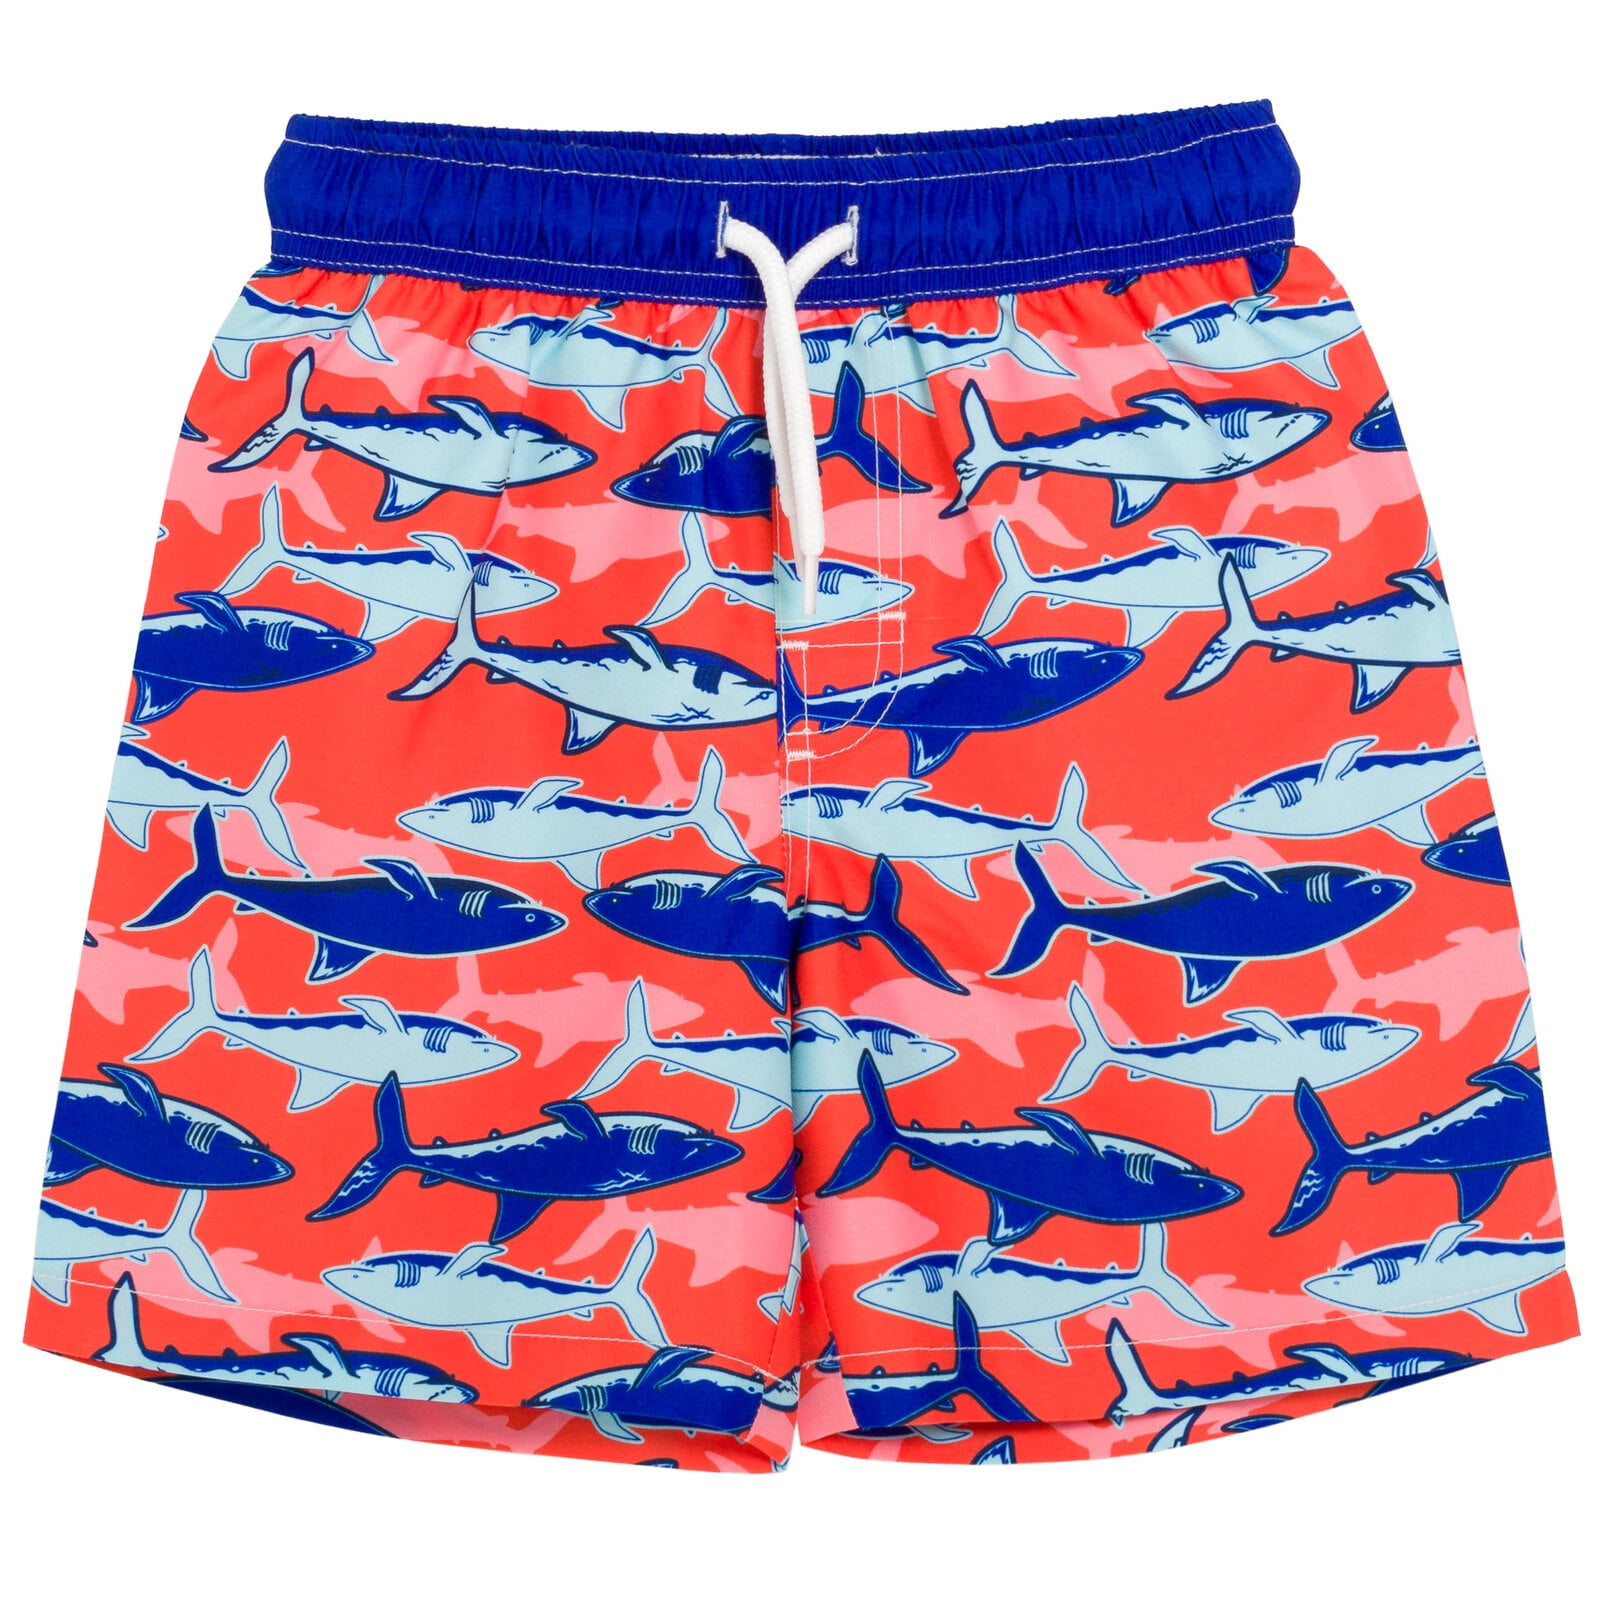 Dreamwave Shark Toddler Boys Swim Trunks Bathing Suit Red 5T - Walmart.com